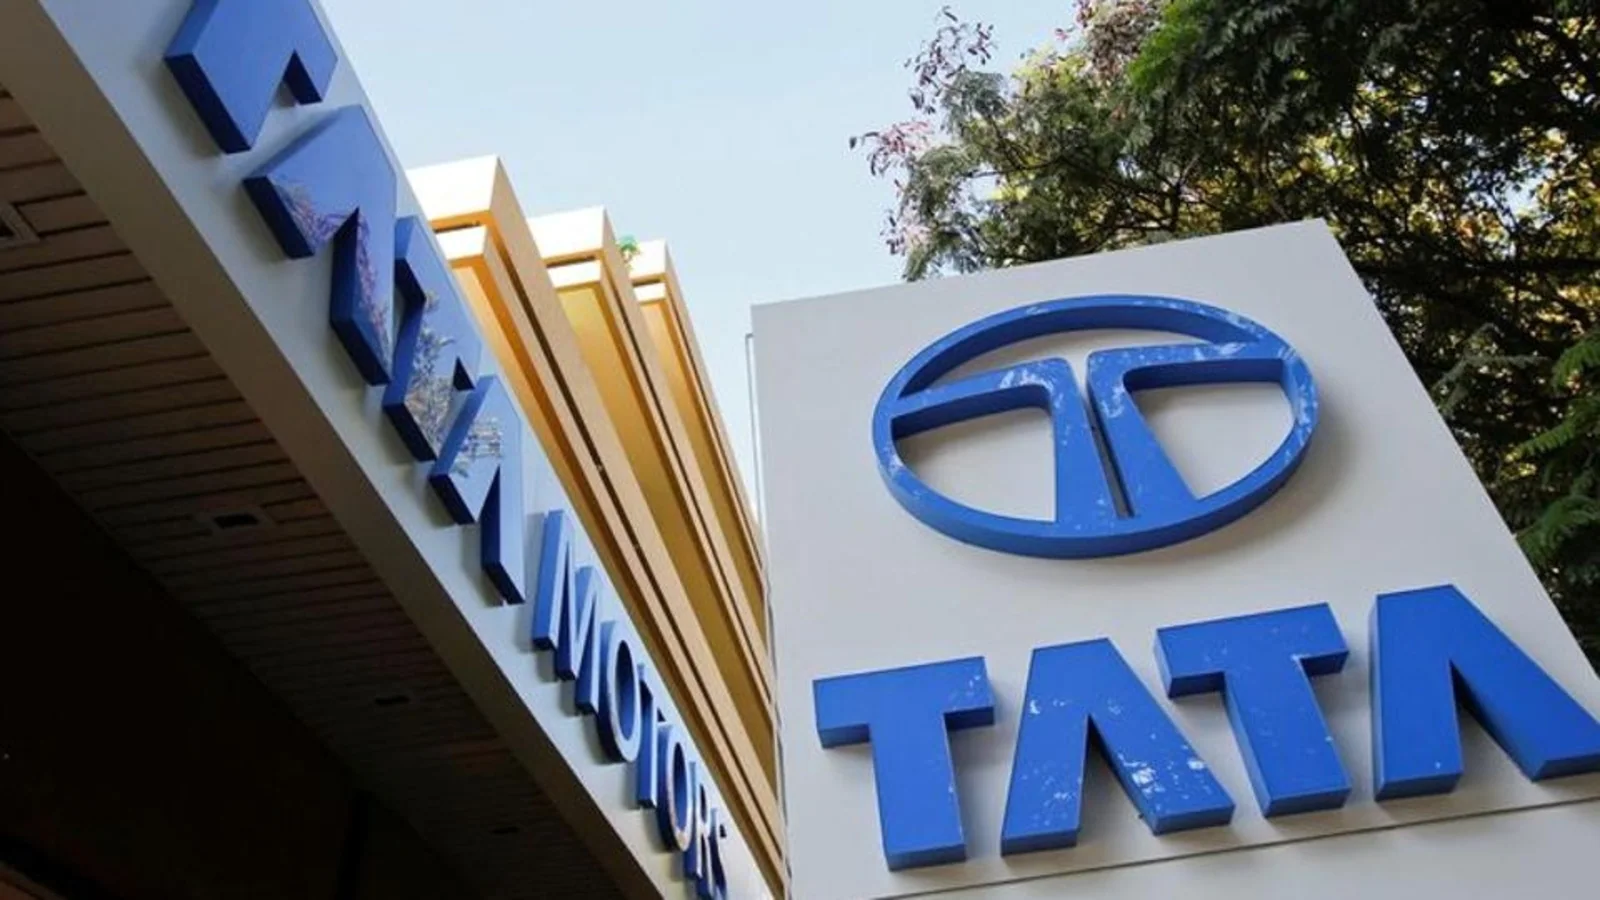 Tata Motors total domestic sales up 44% at 80,633 units in September: Report